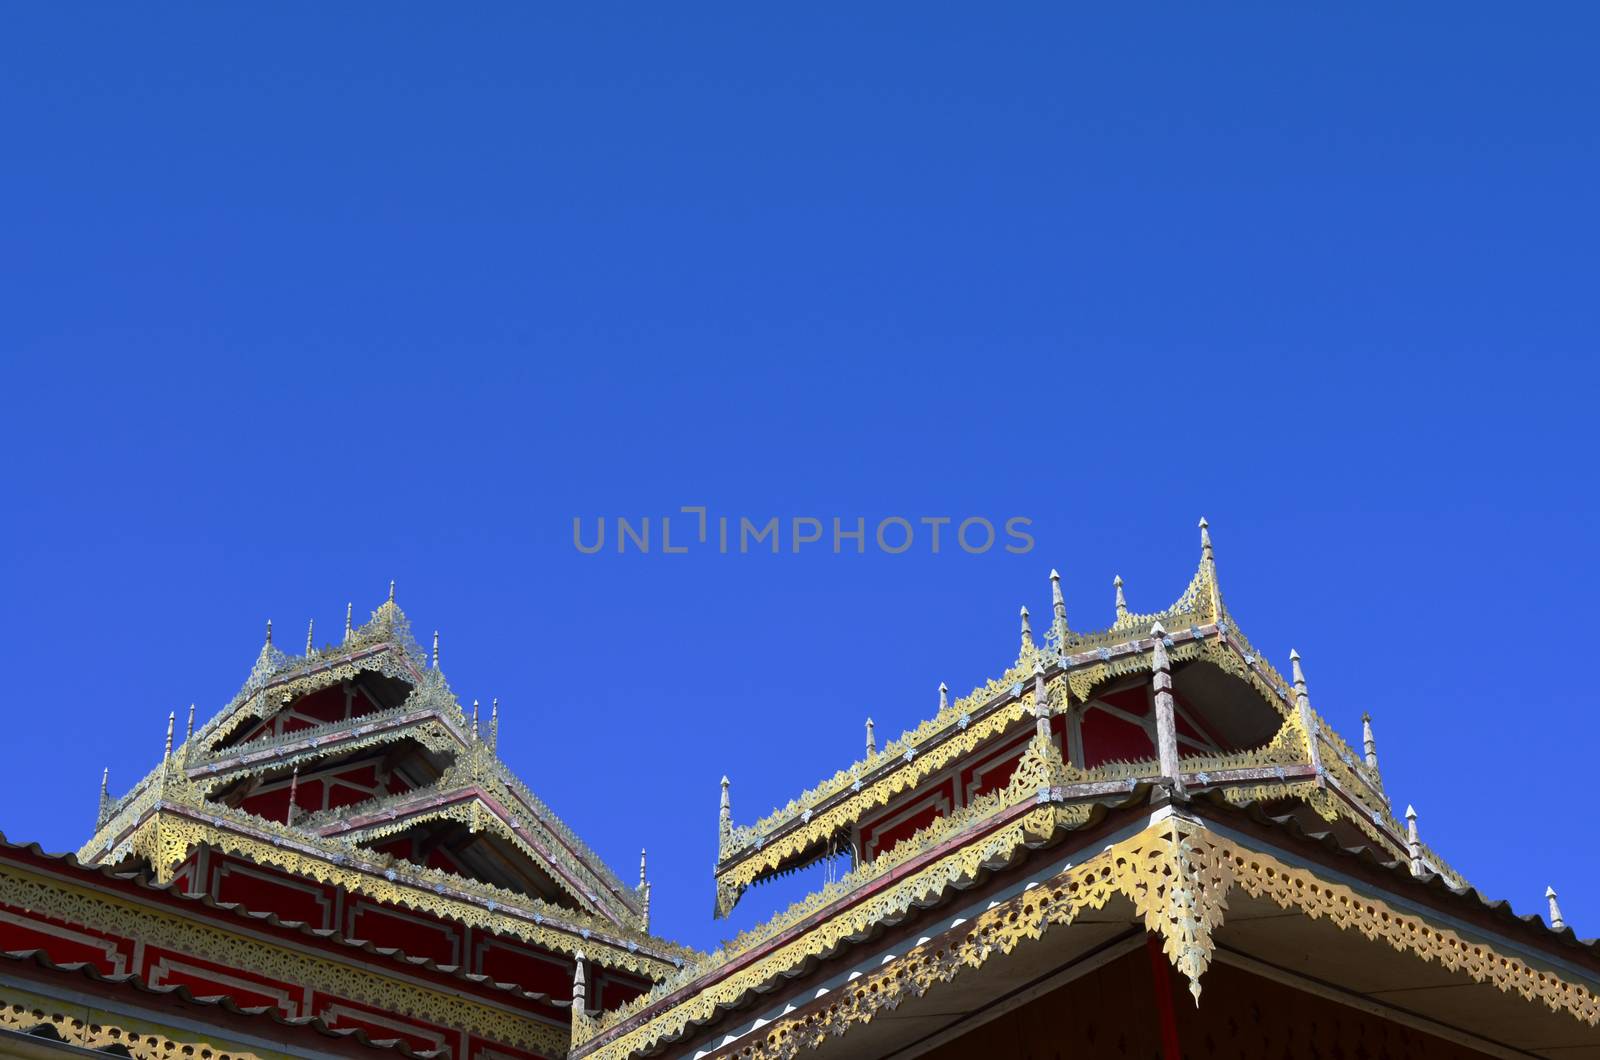 Architecture of Roof of Tai Yai's Buddhist Temple in Wat Tai Yai's Buddhist Temple.